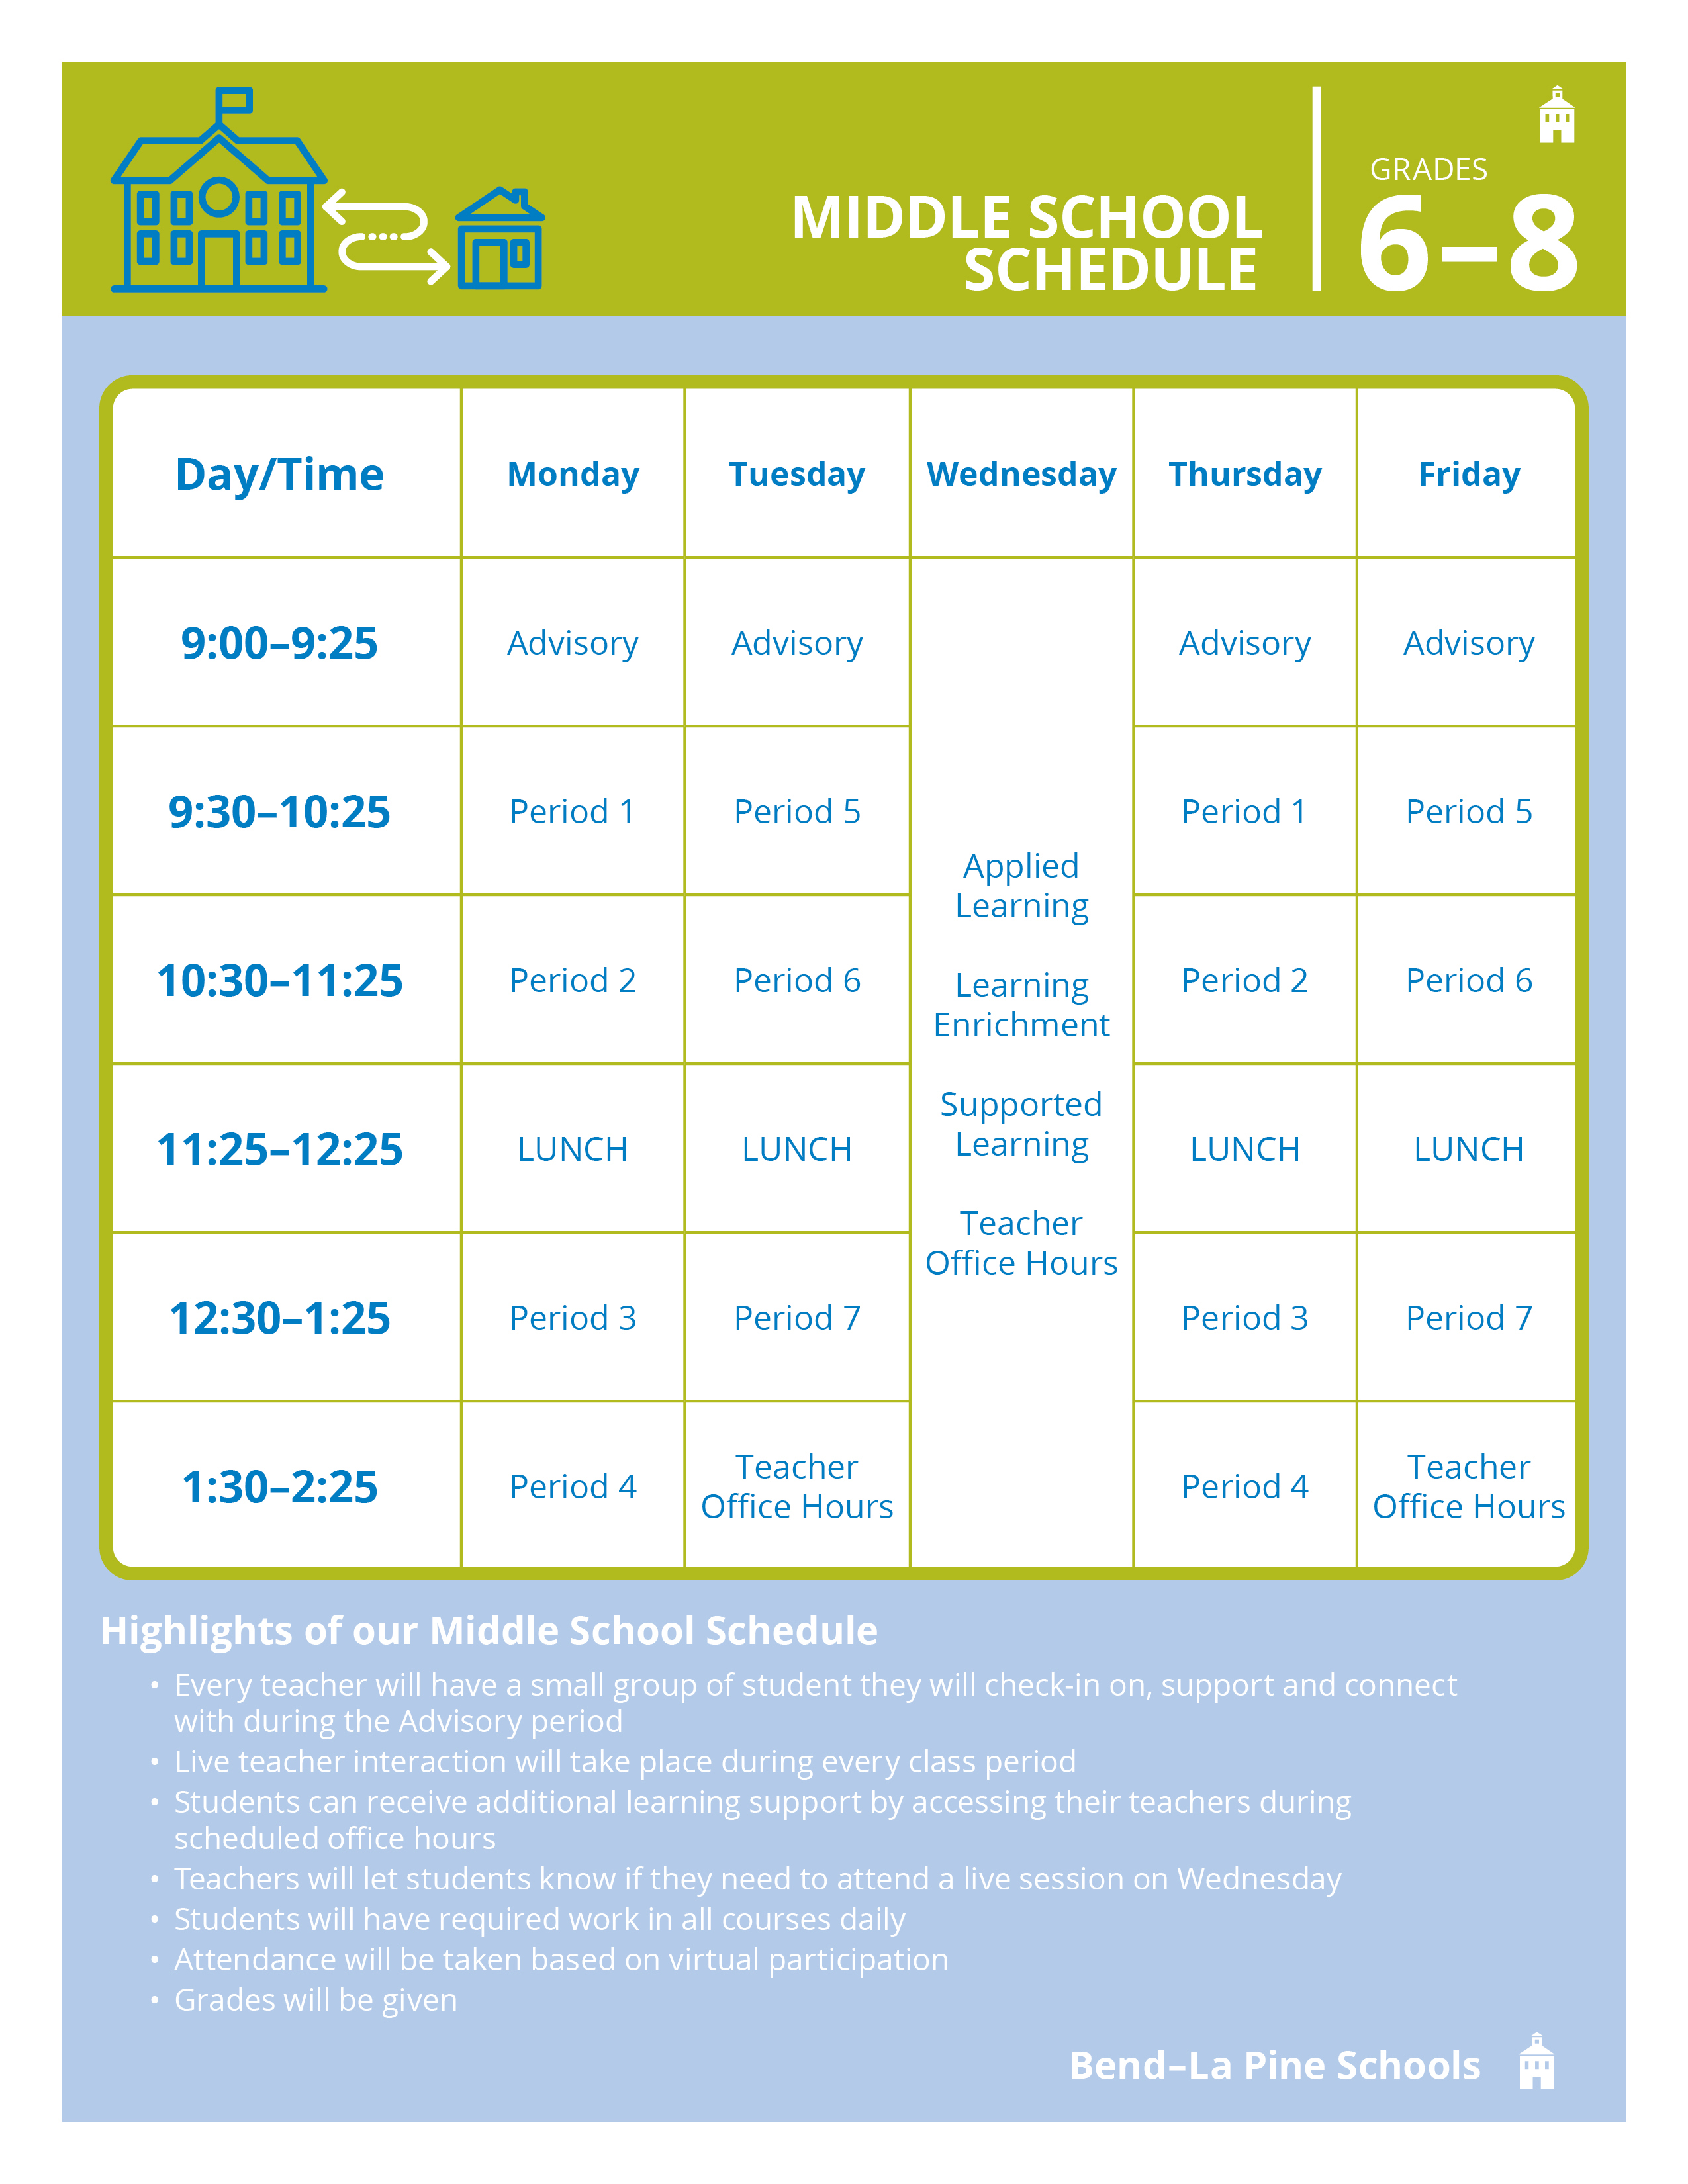 bend-la-pine-schools-daily-schedules-released